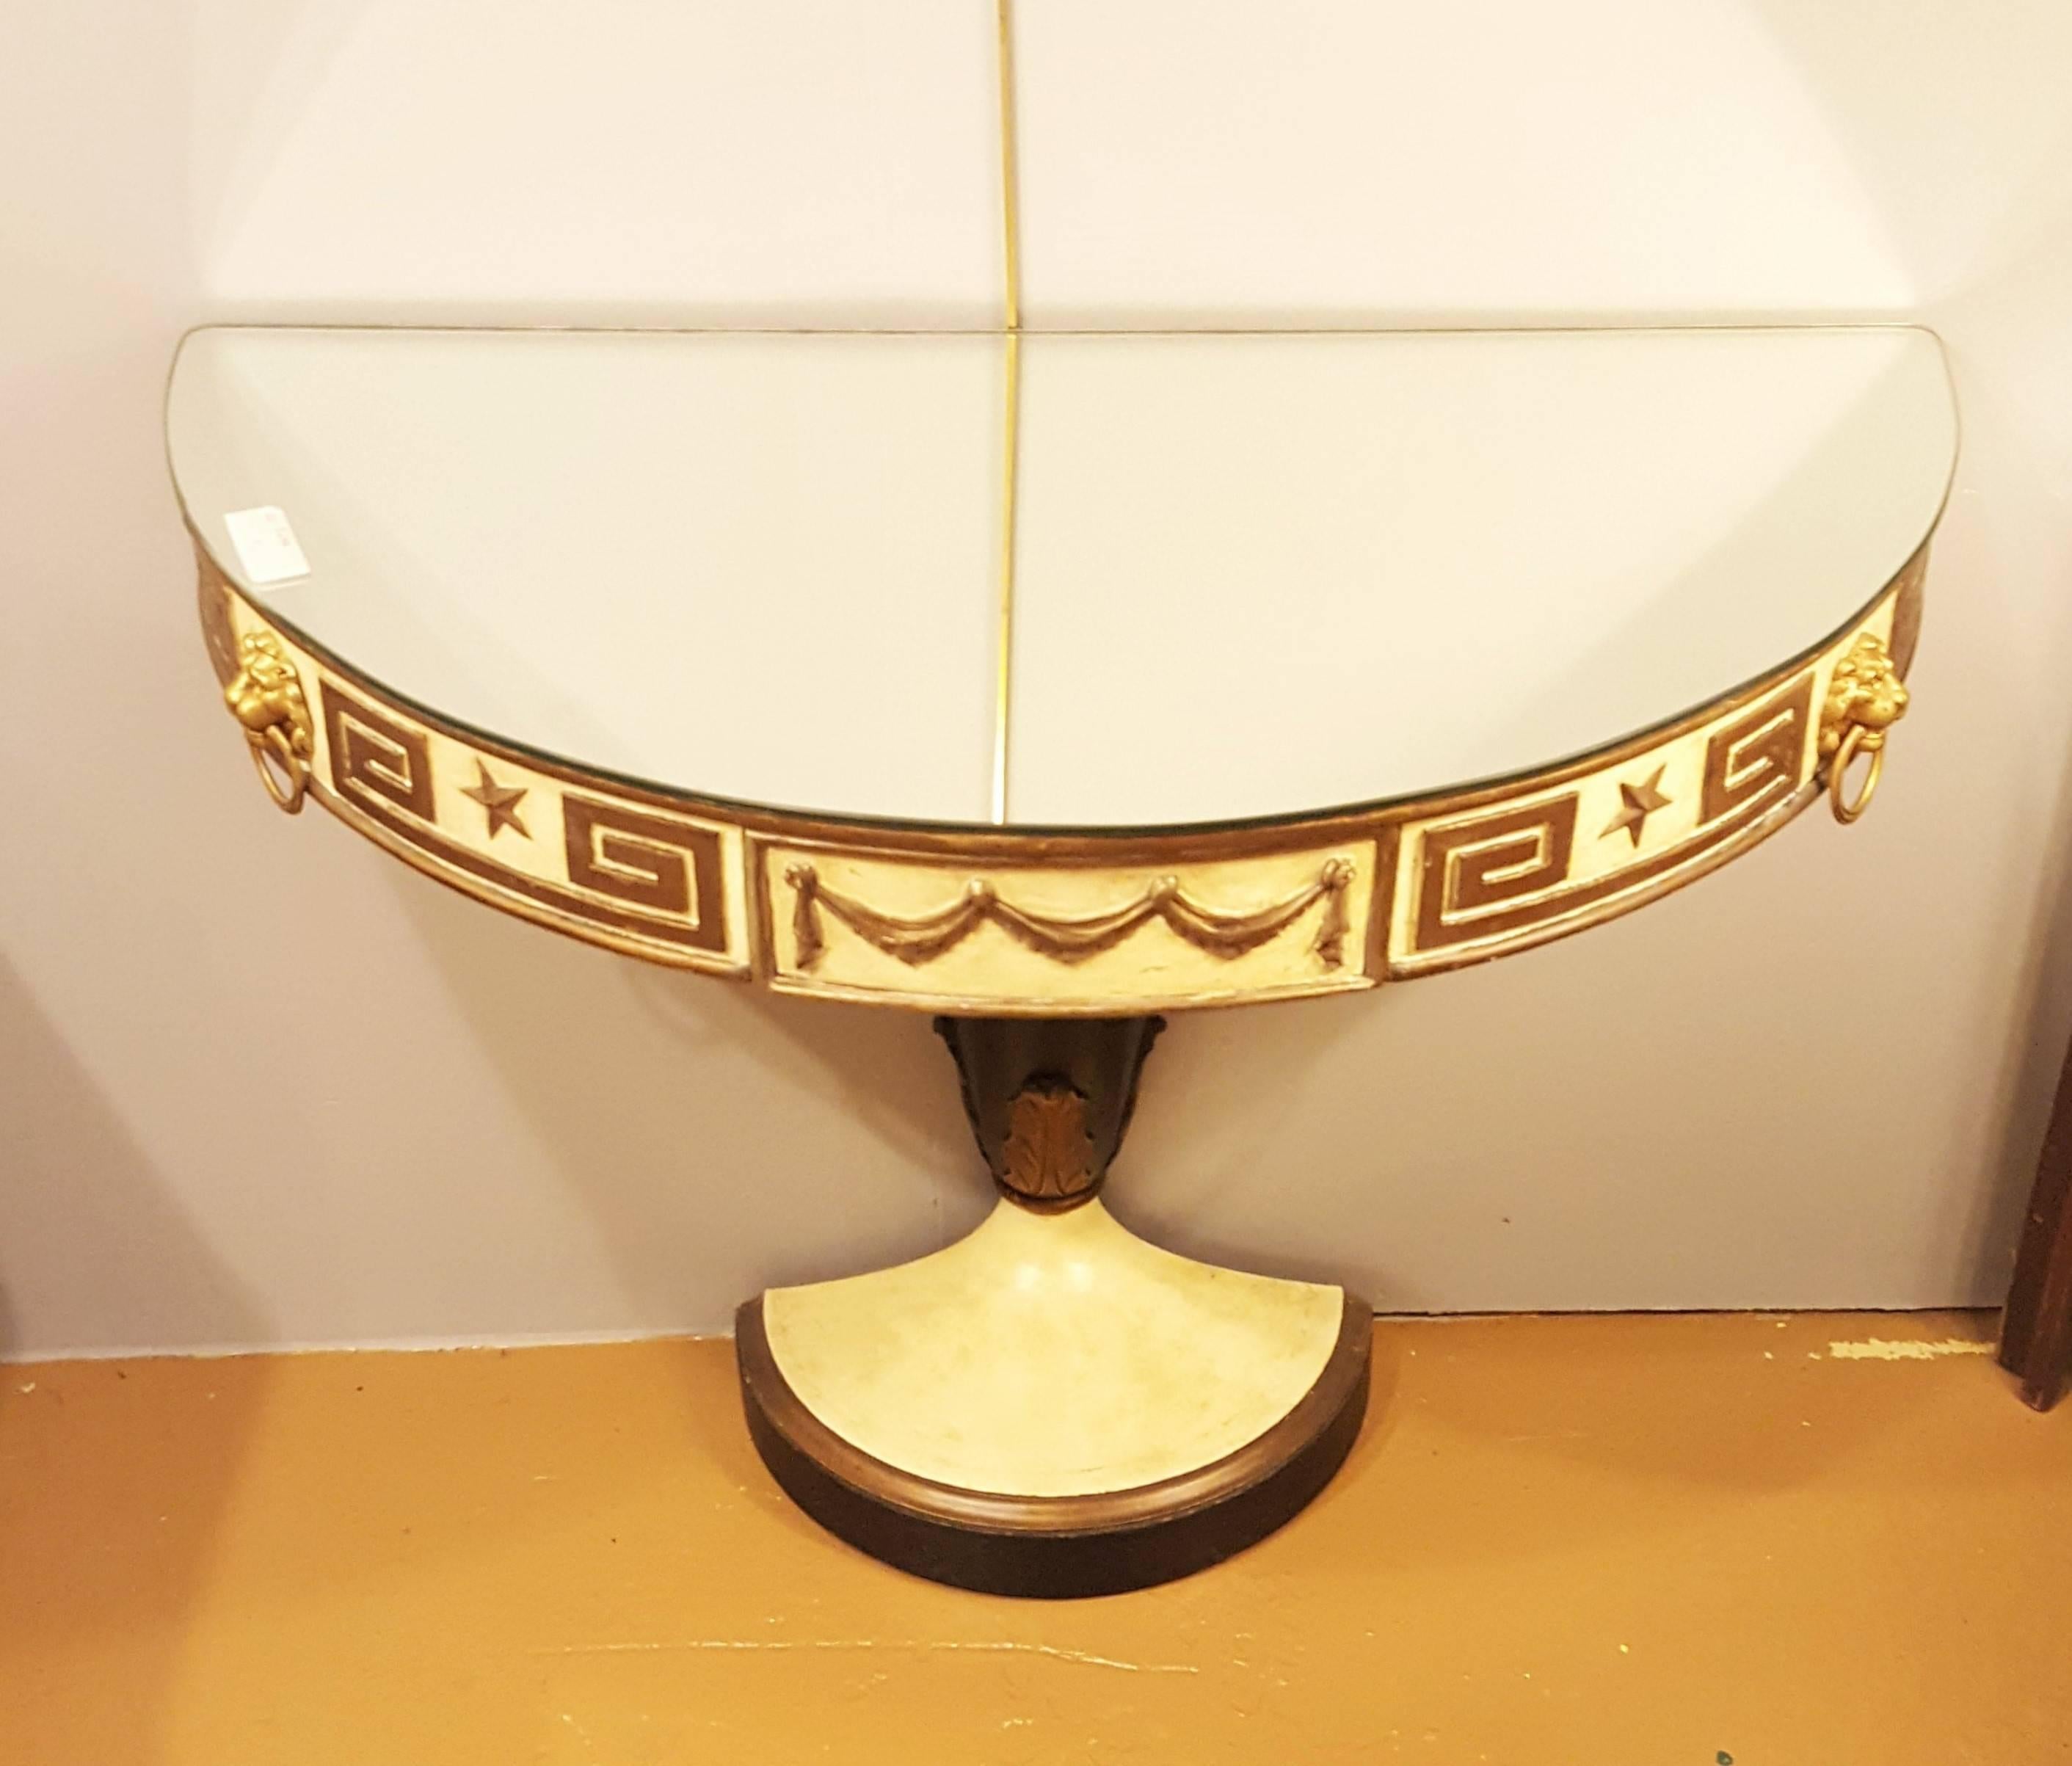 Hollywood Regency Mirrored Top Demilune Console Table Gold Gilt Greek Key Design Manner Of Jansen